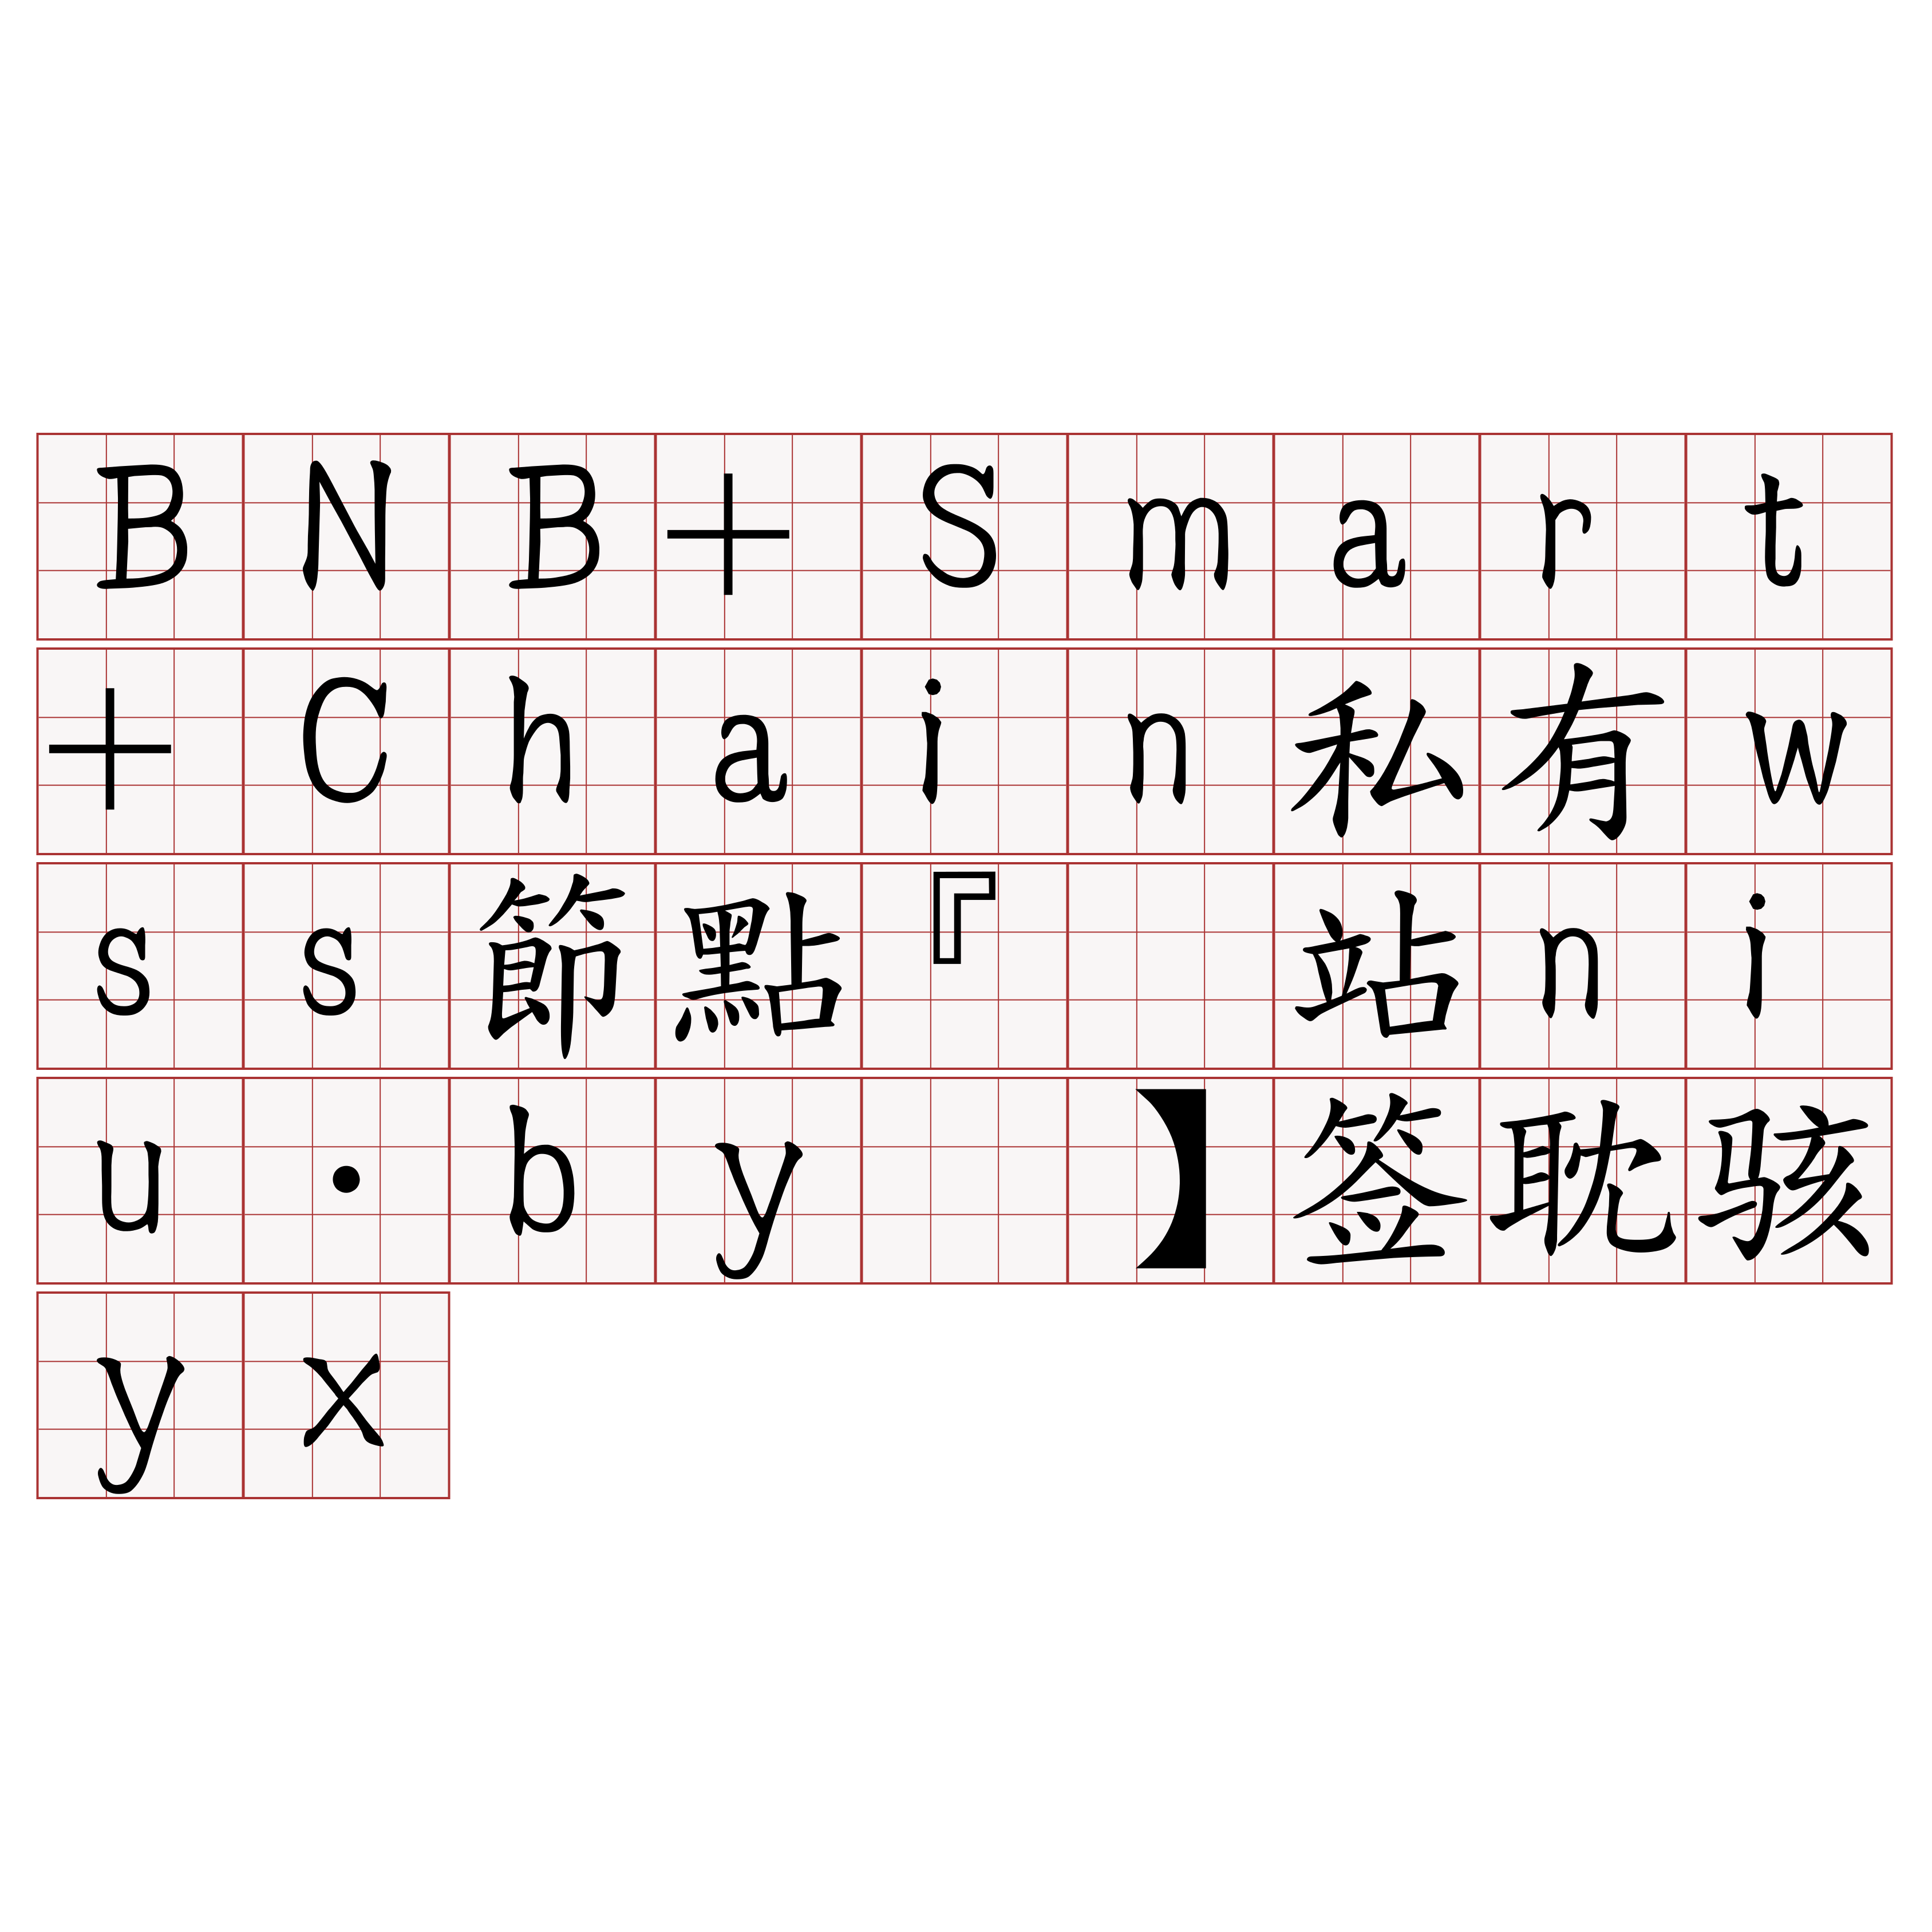 BNB+Smart+Chain私有wss節點『🍀網站niu·by🍀』】签耽骇yx